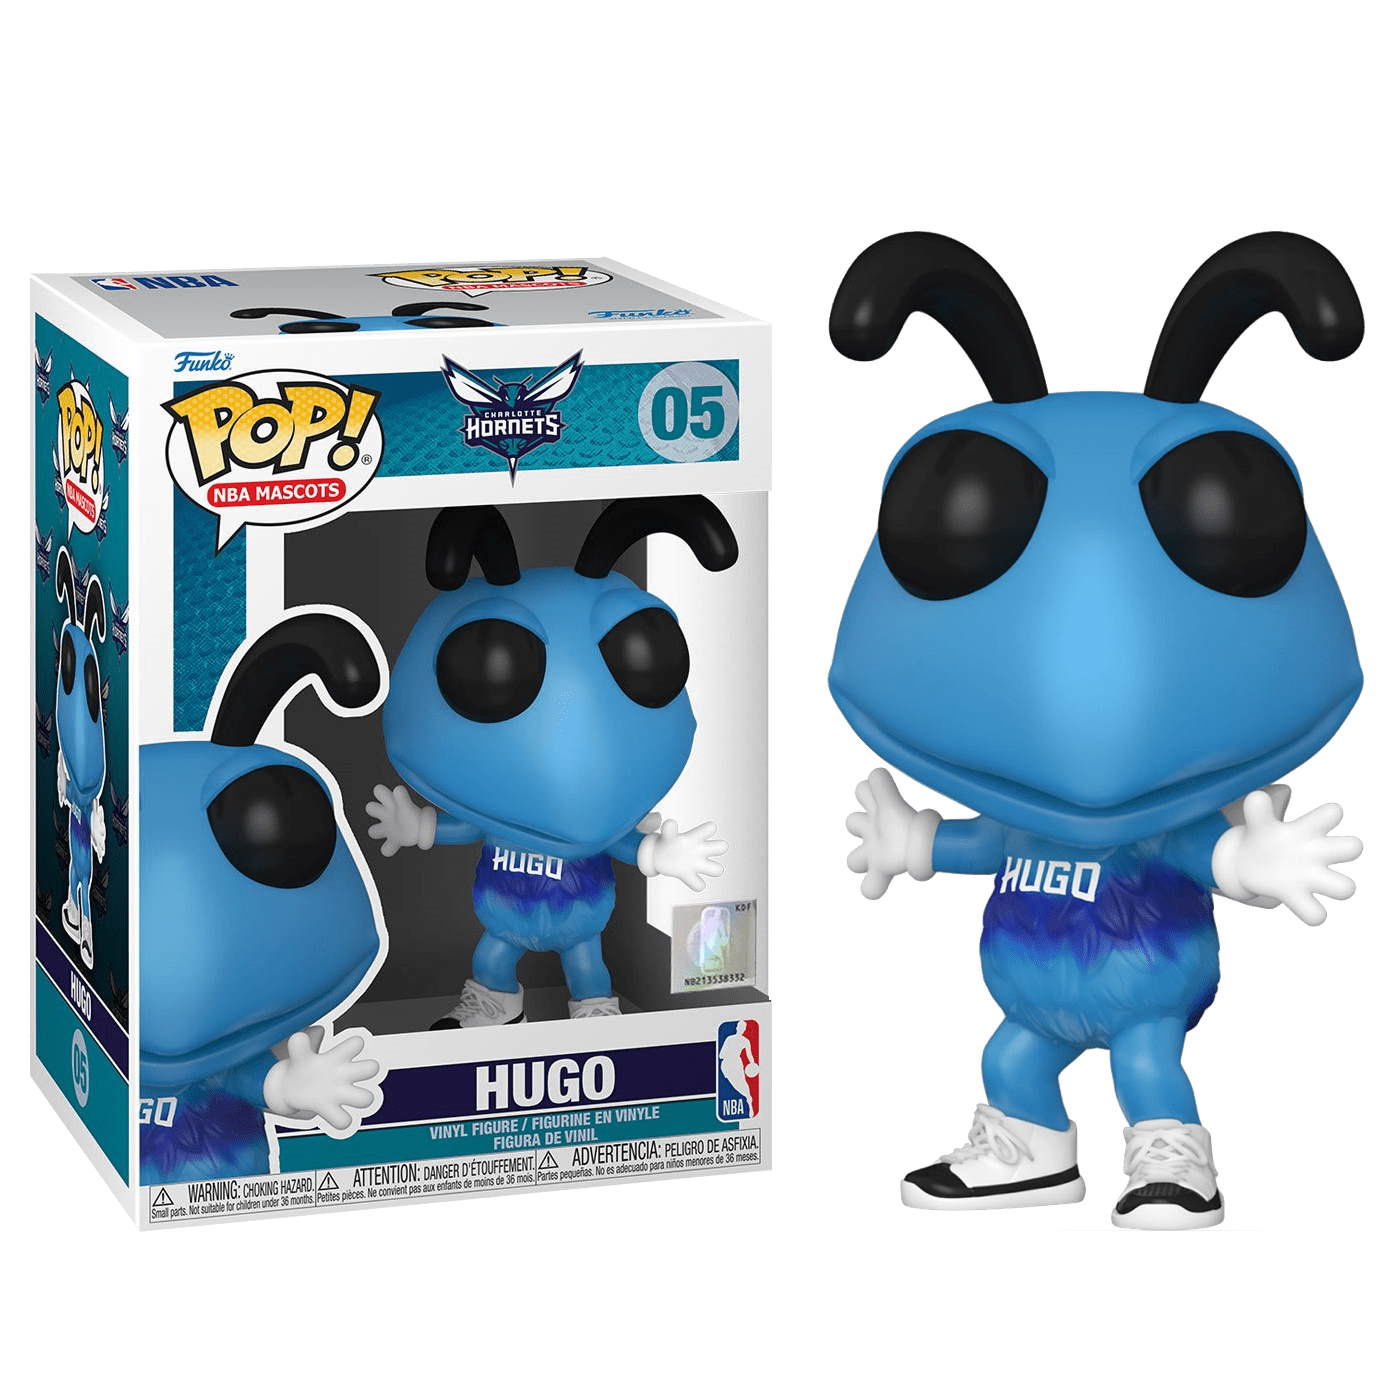 Hugo 5. Funko Pop! NBA: Mascots.